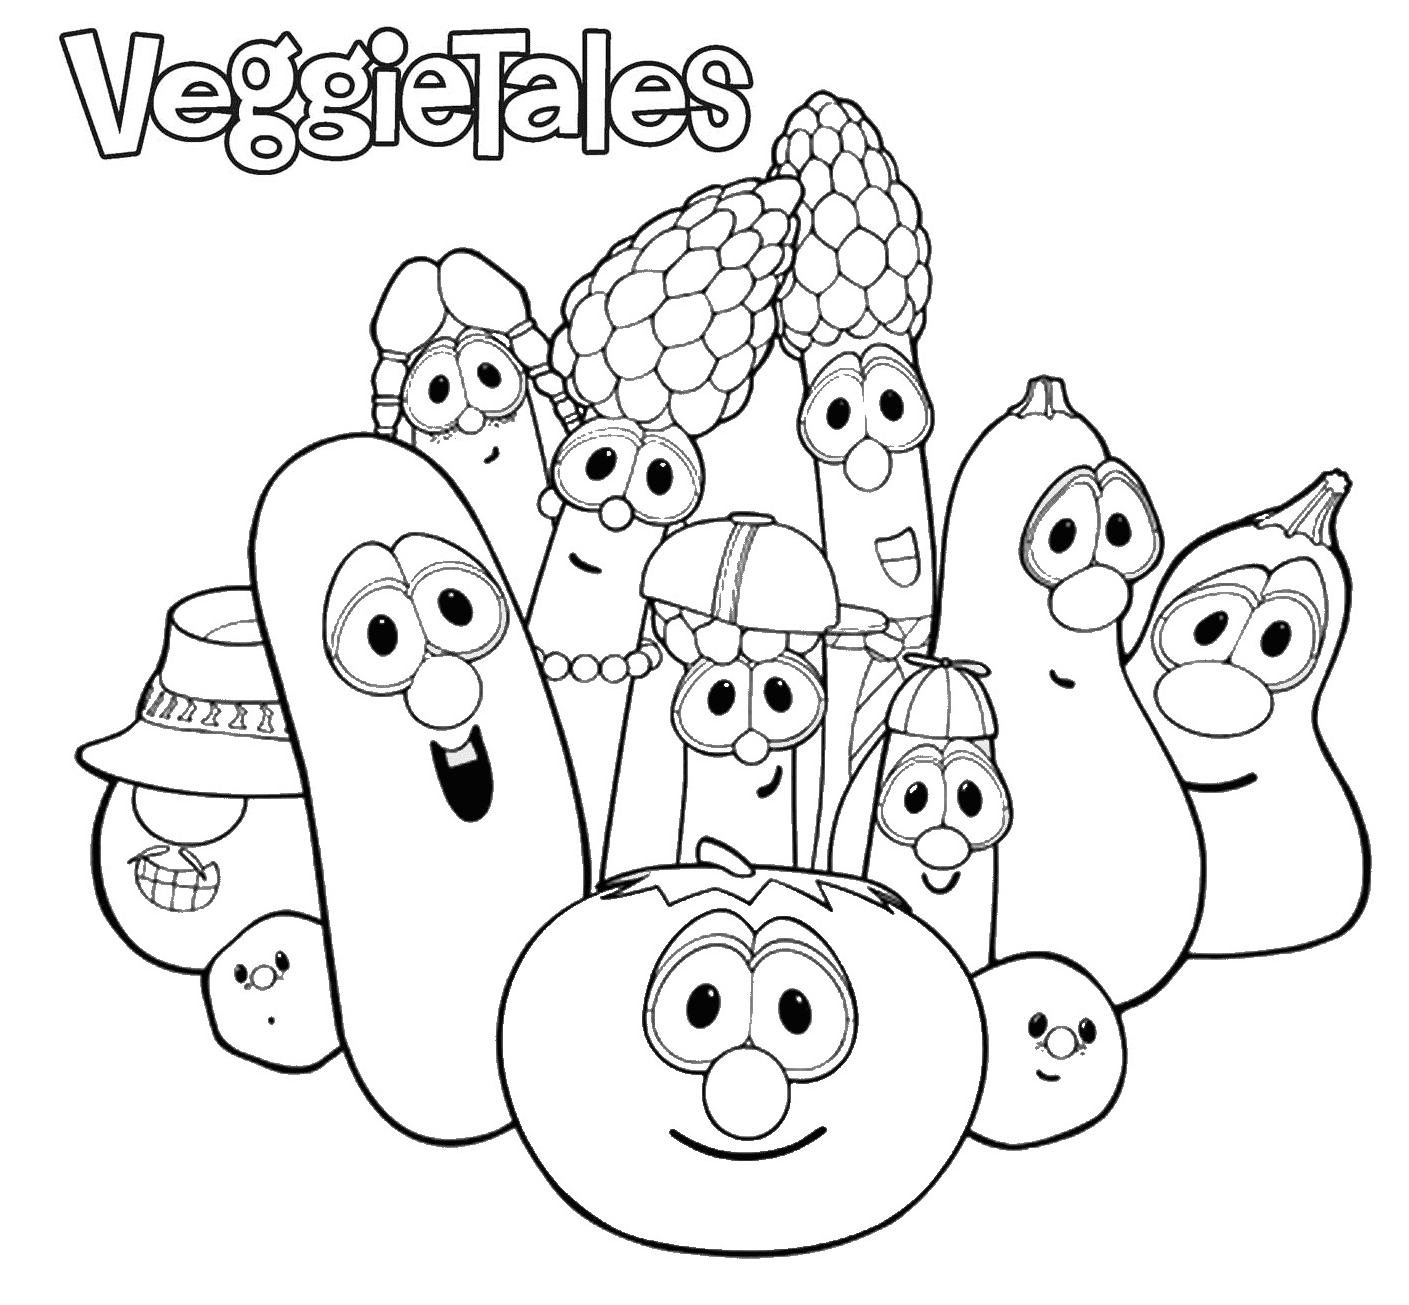 VeggieTales من VeggieTales